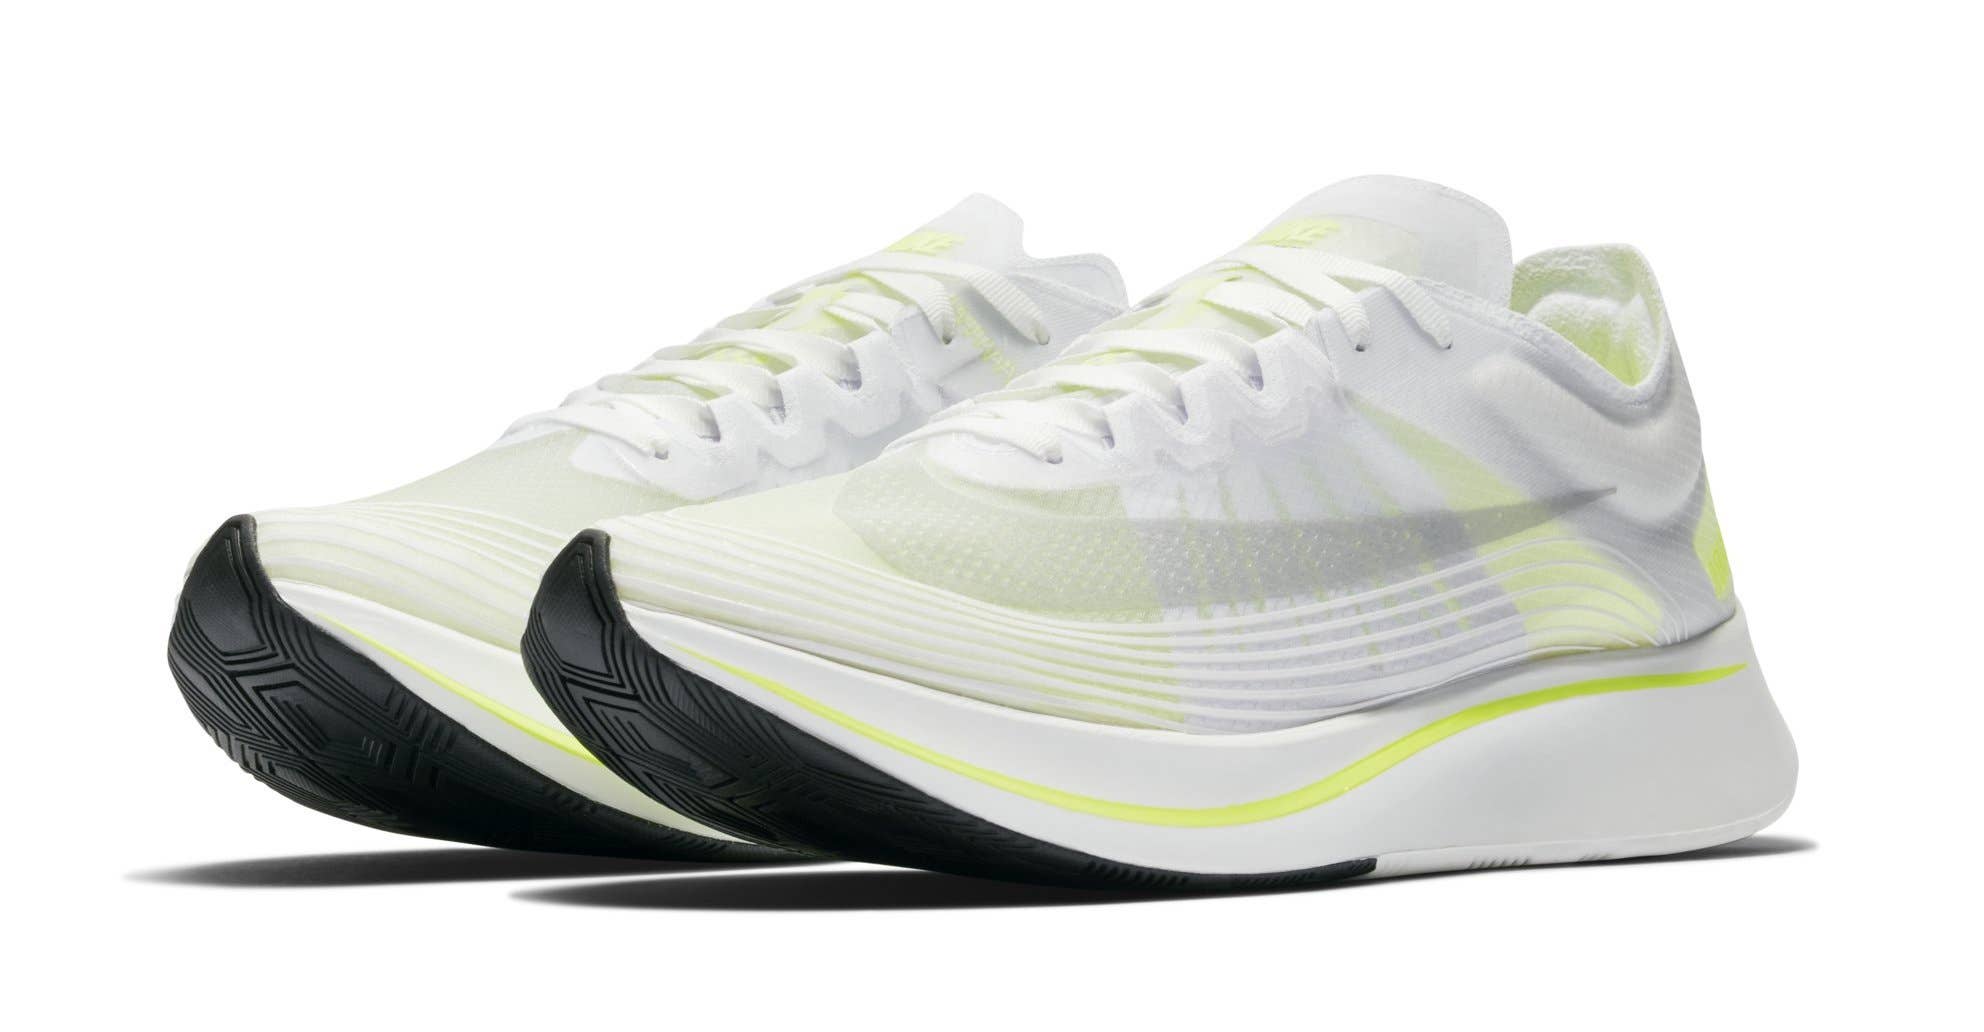 Nike Zoom Fly SP 'White/Volt/Glow' AJ9282 107 (Pair)